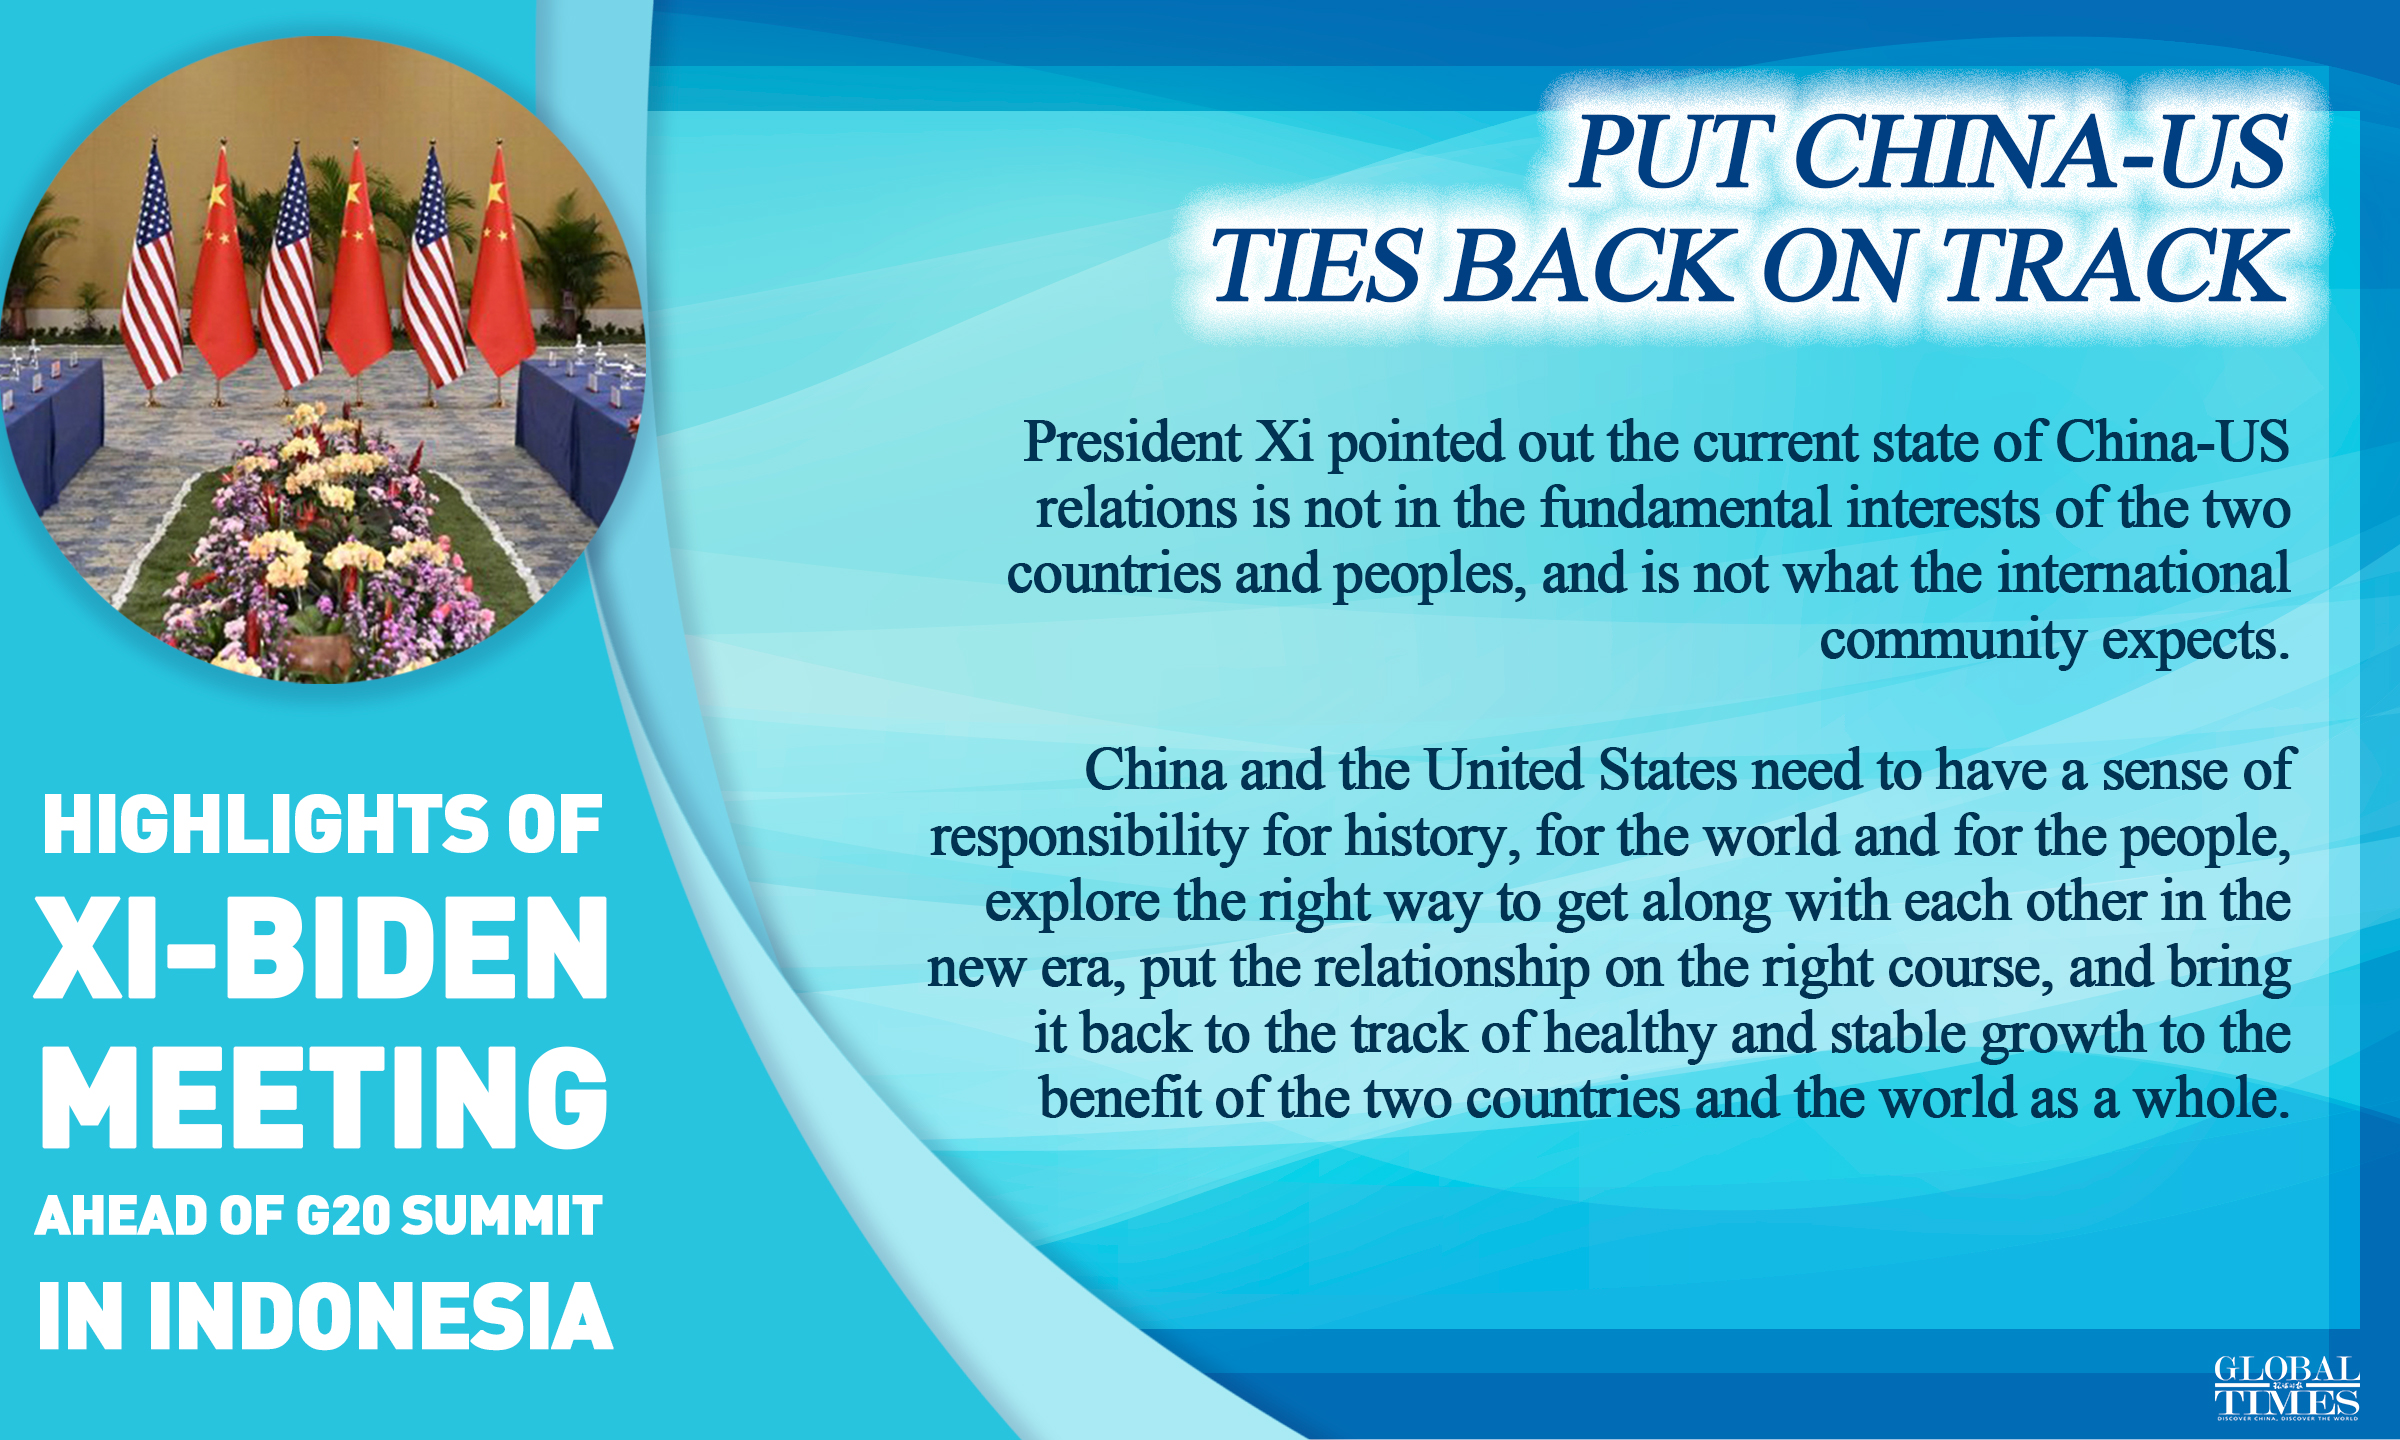 Highlights of Xi-Biden meeting ahead of G20 summit in Indonesia. Graphic: Jin Jianyu and Xu Zihe